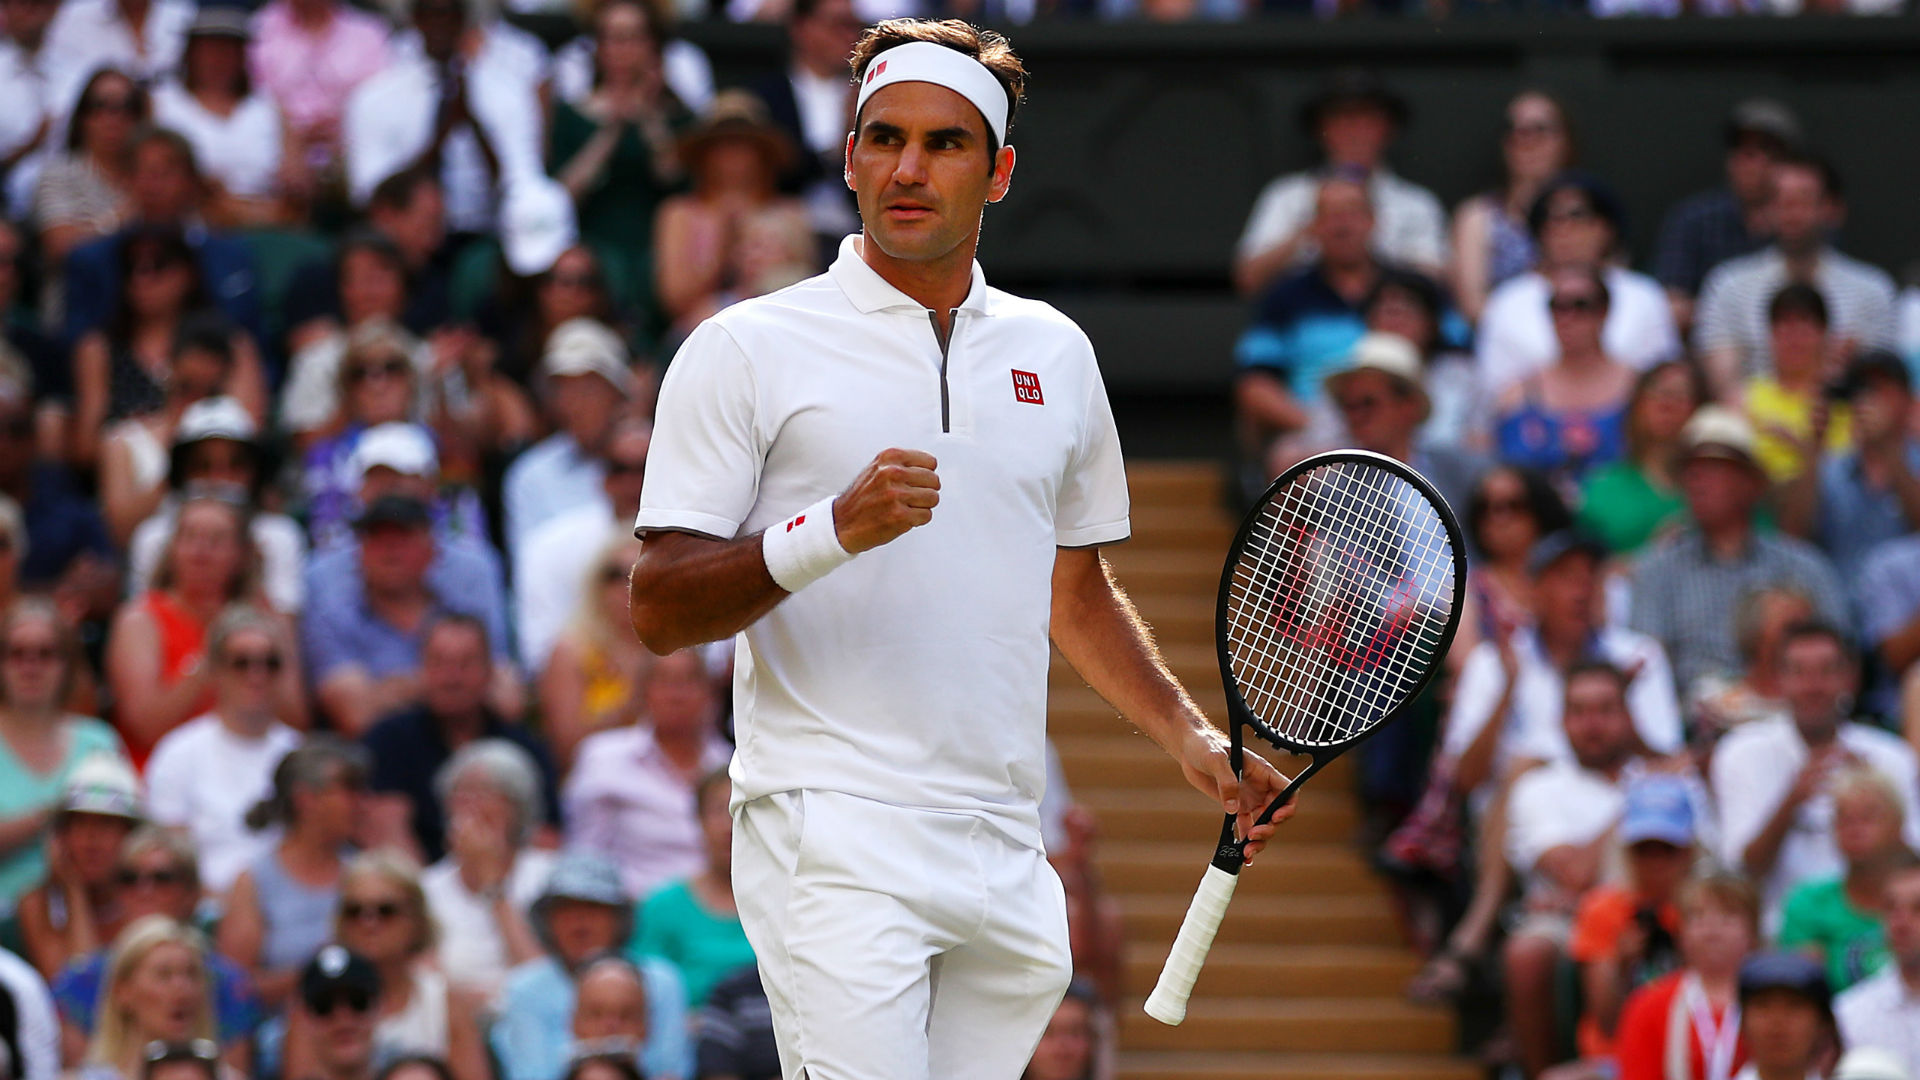 Wimbledon 2019: Roger Federer beats Rafael Nadal to set up final